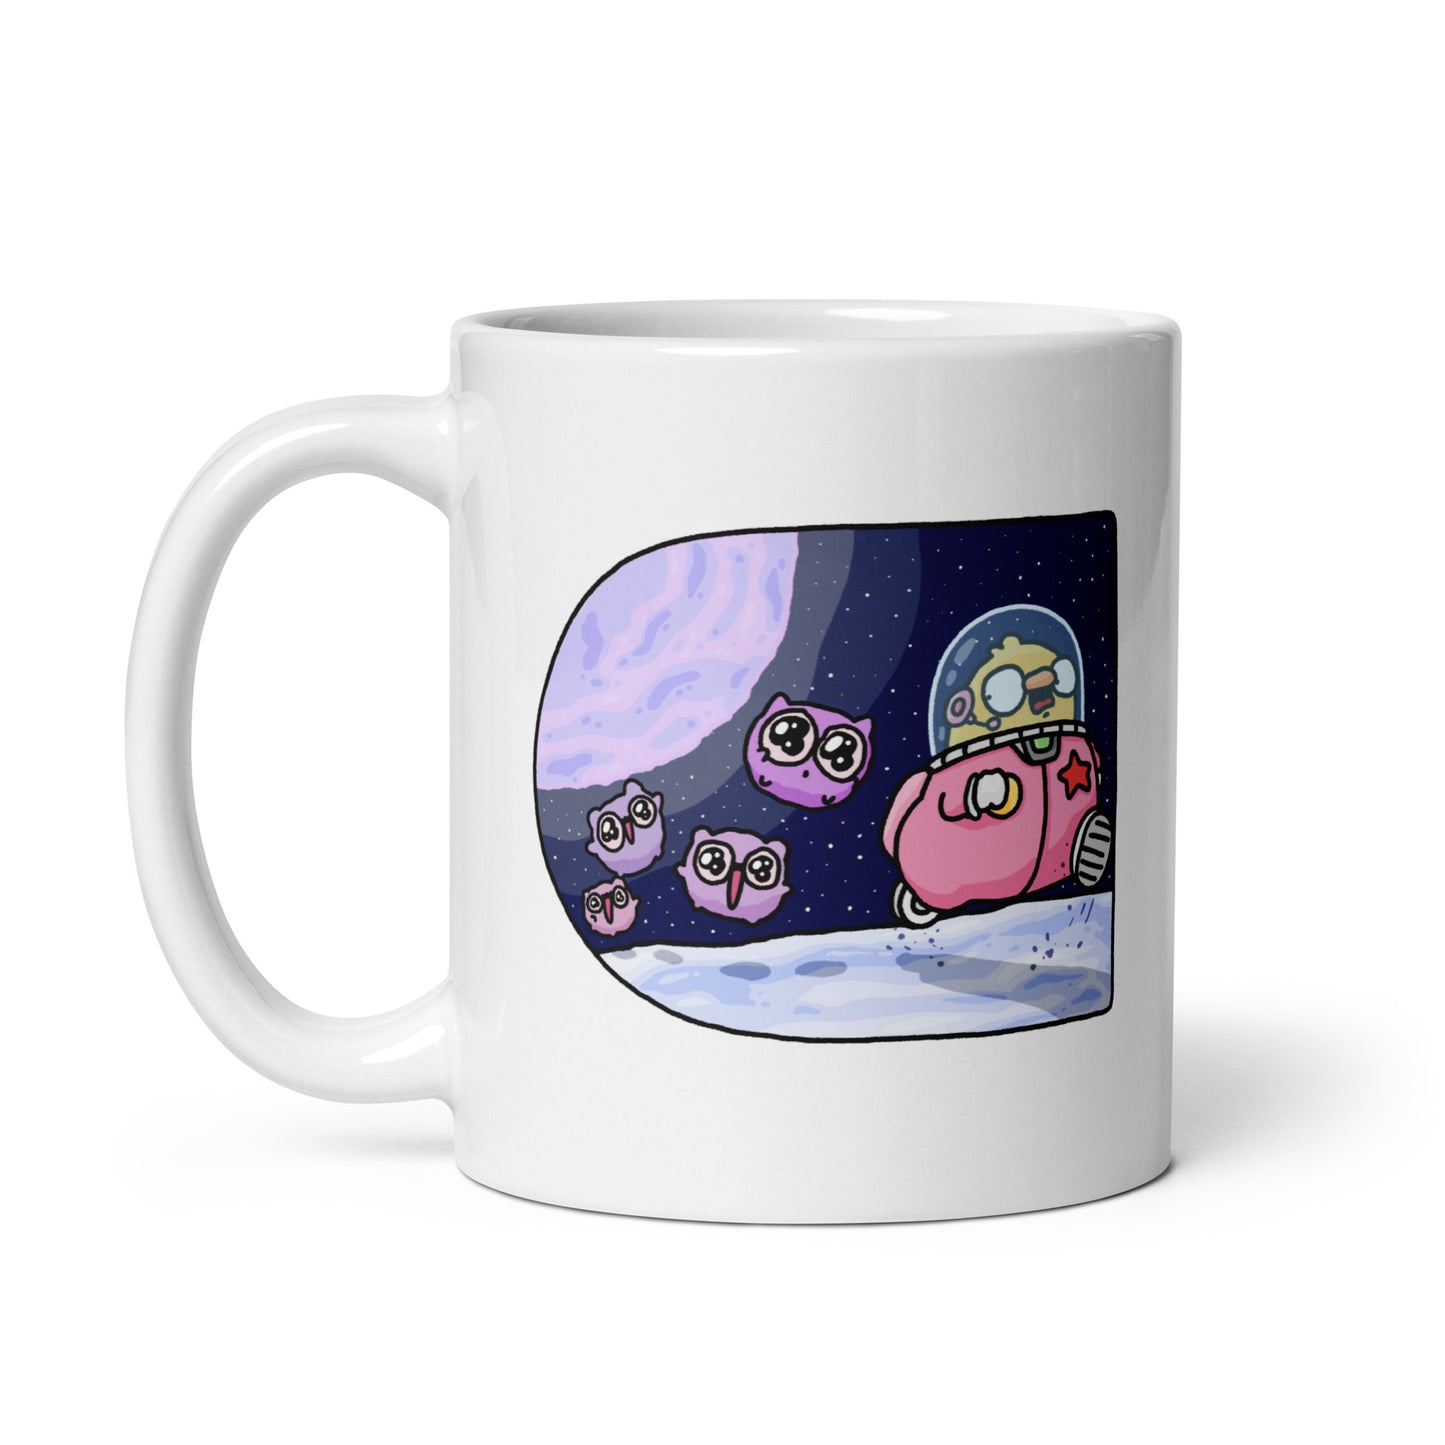 Spacebirb mug